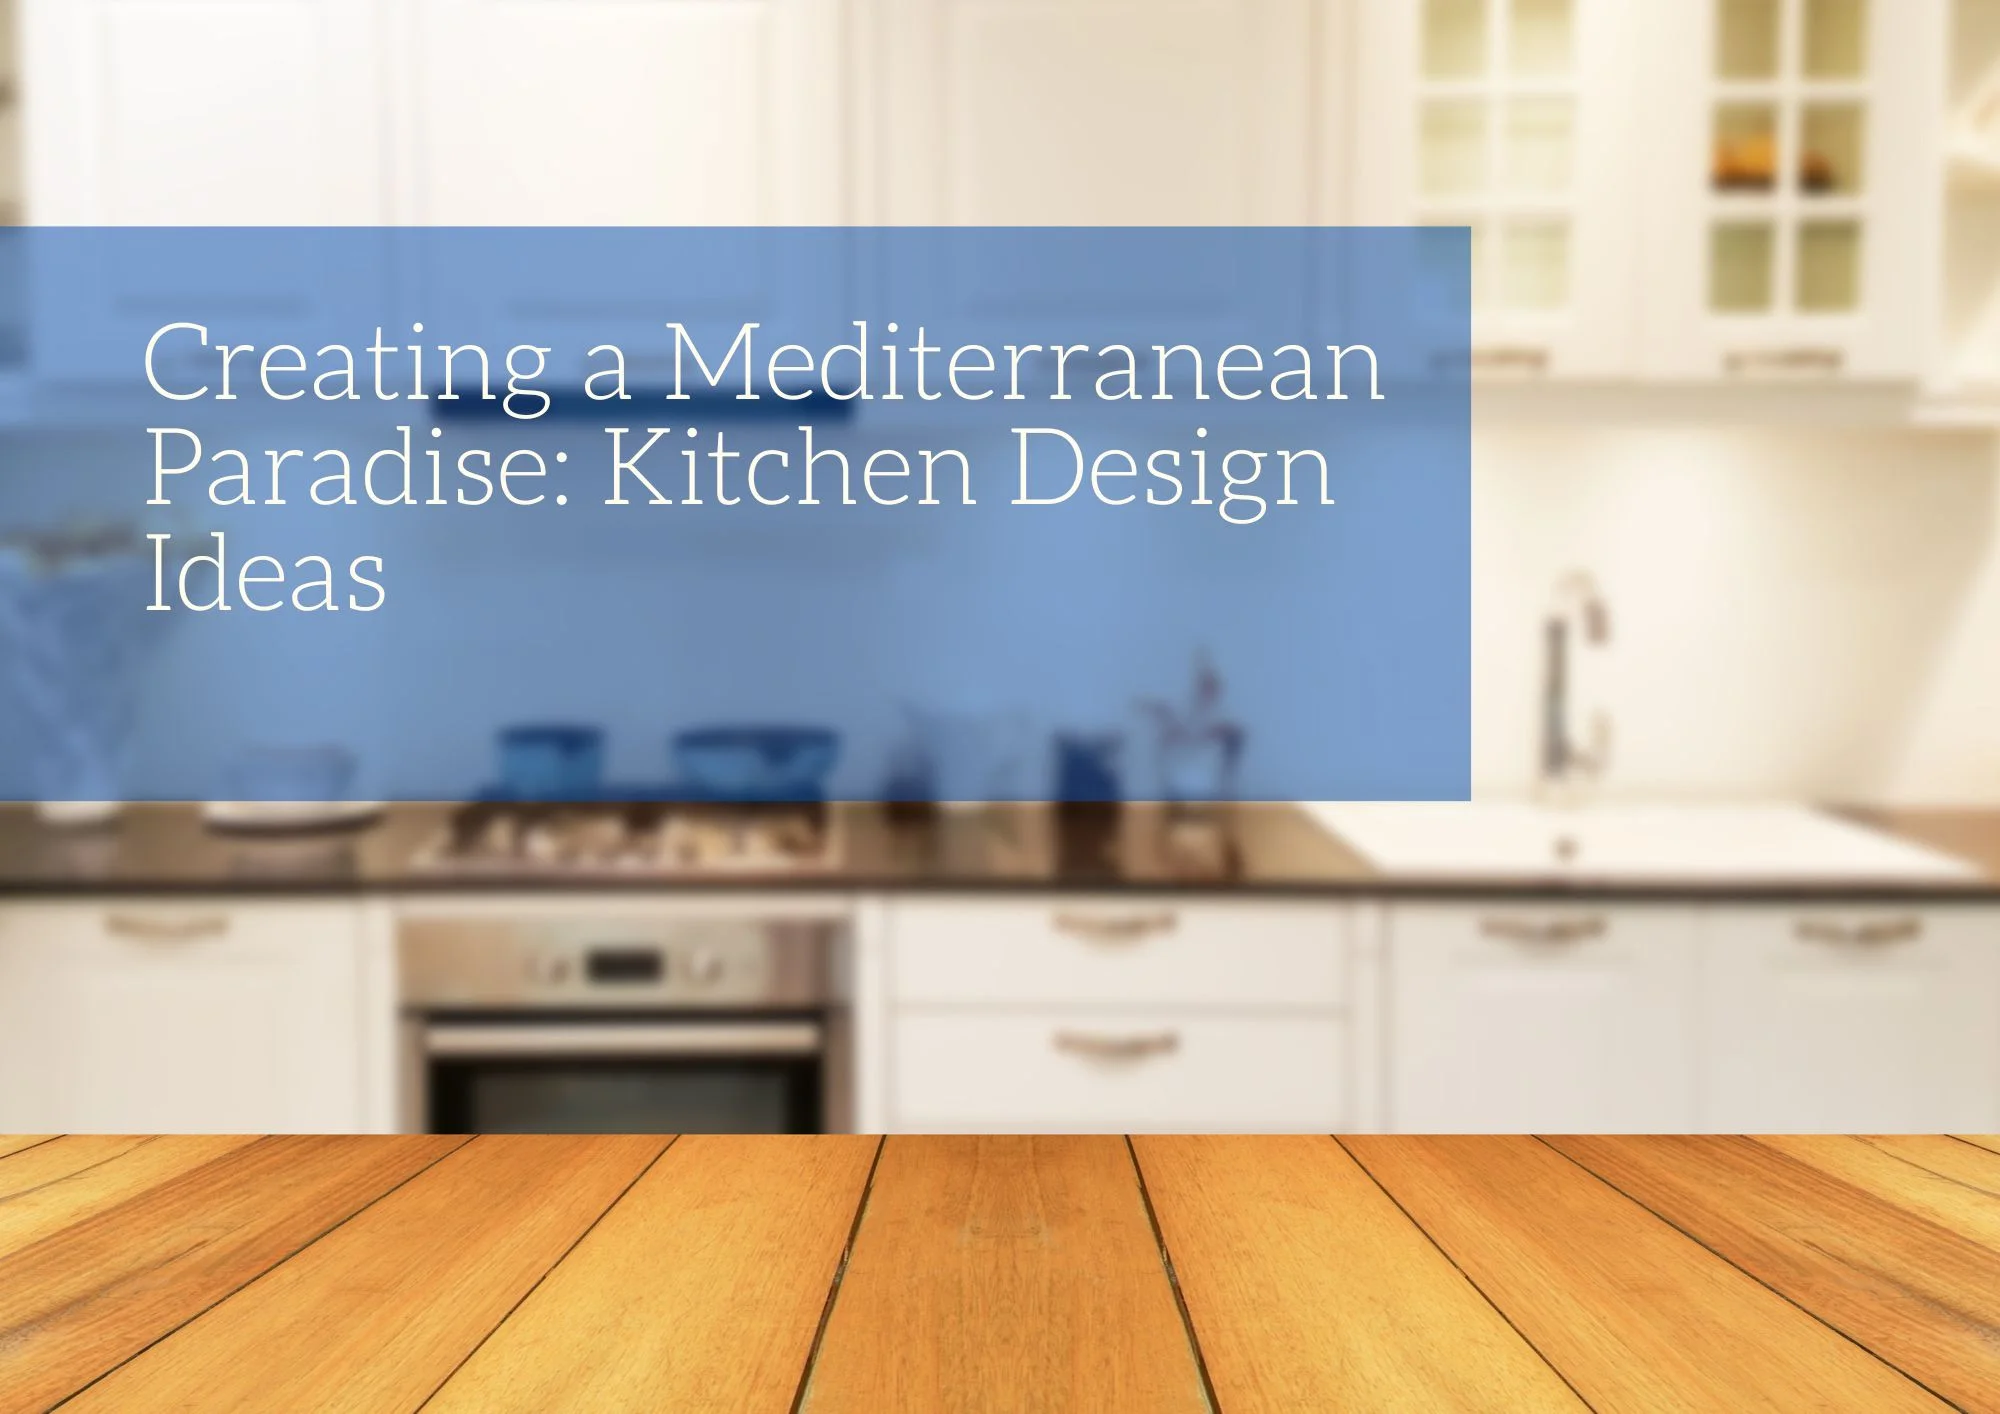 Creating a Mediterranean Paradise: Kitchen Design Ideas